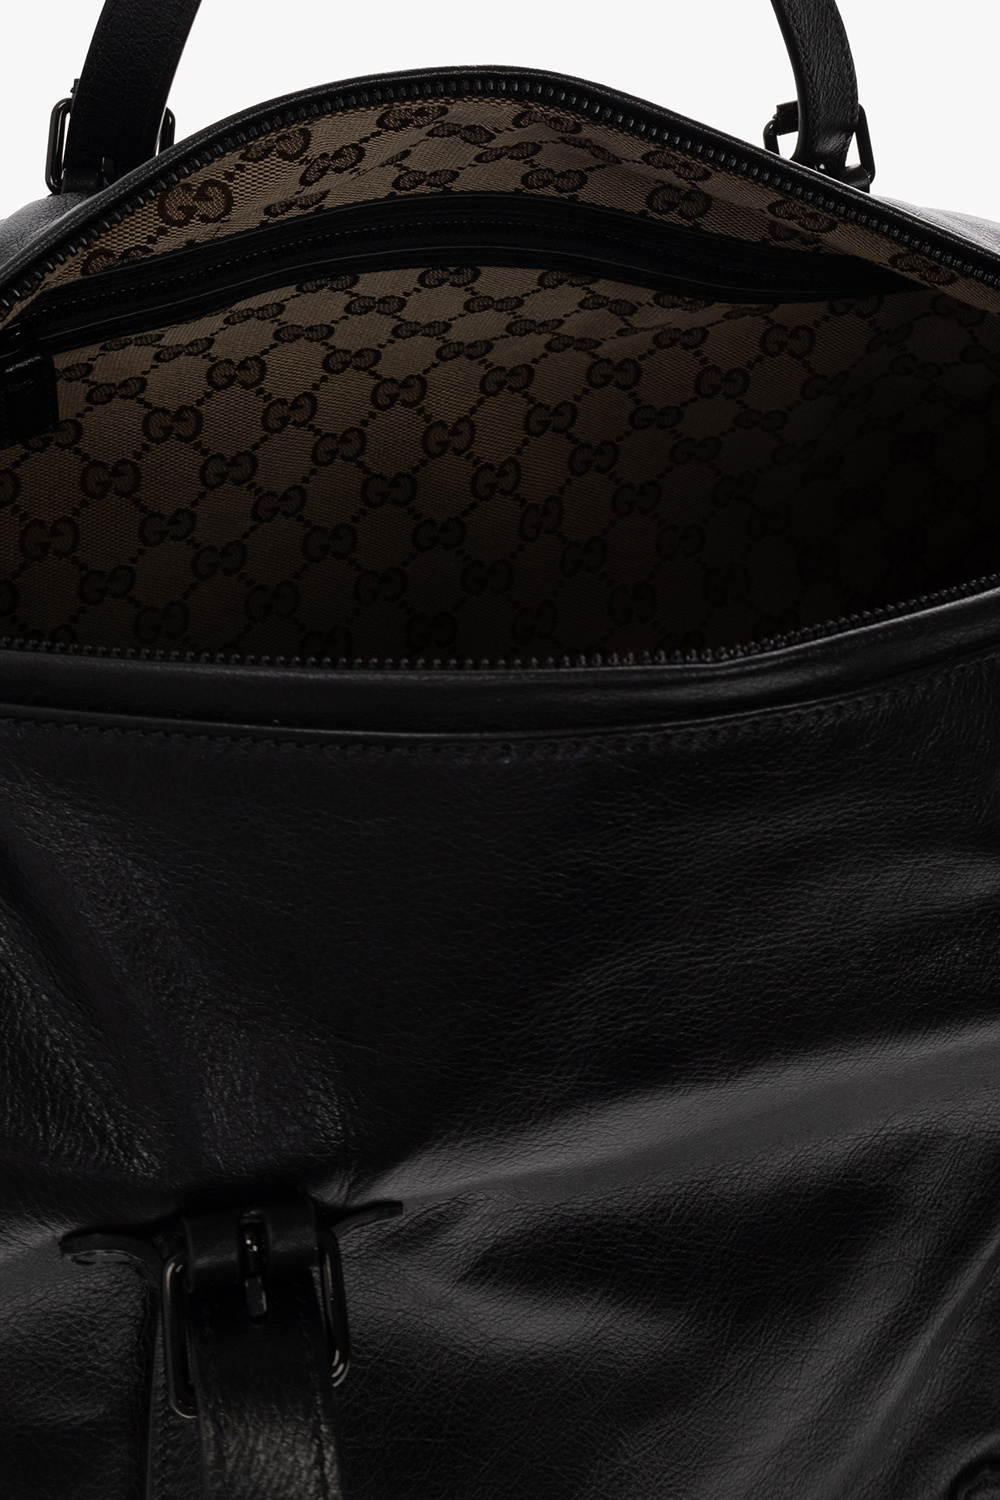 Gucci Leather duffel bag